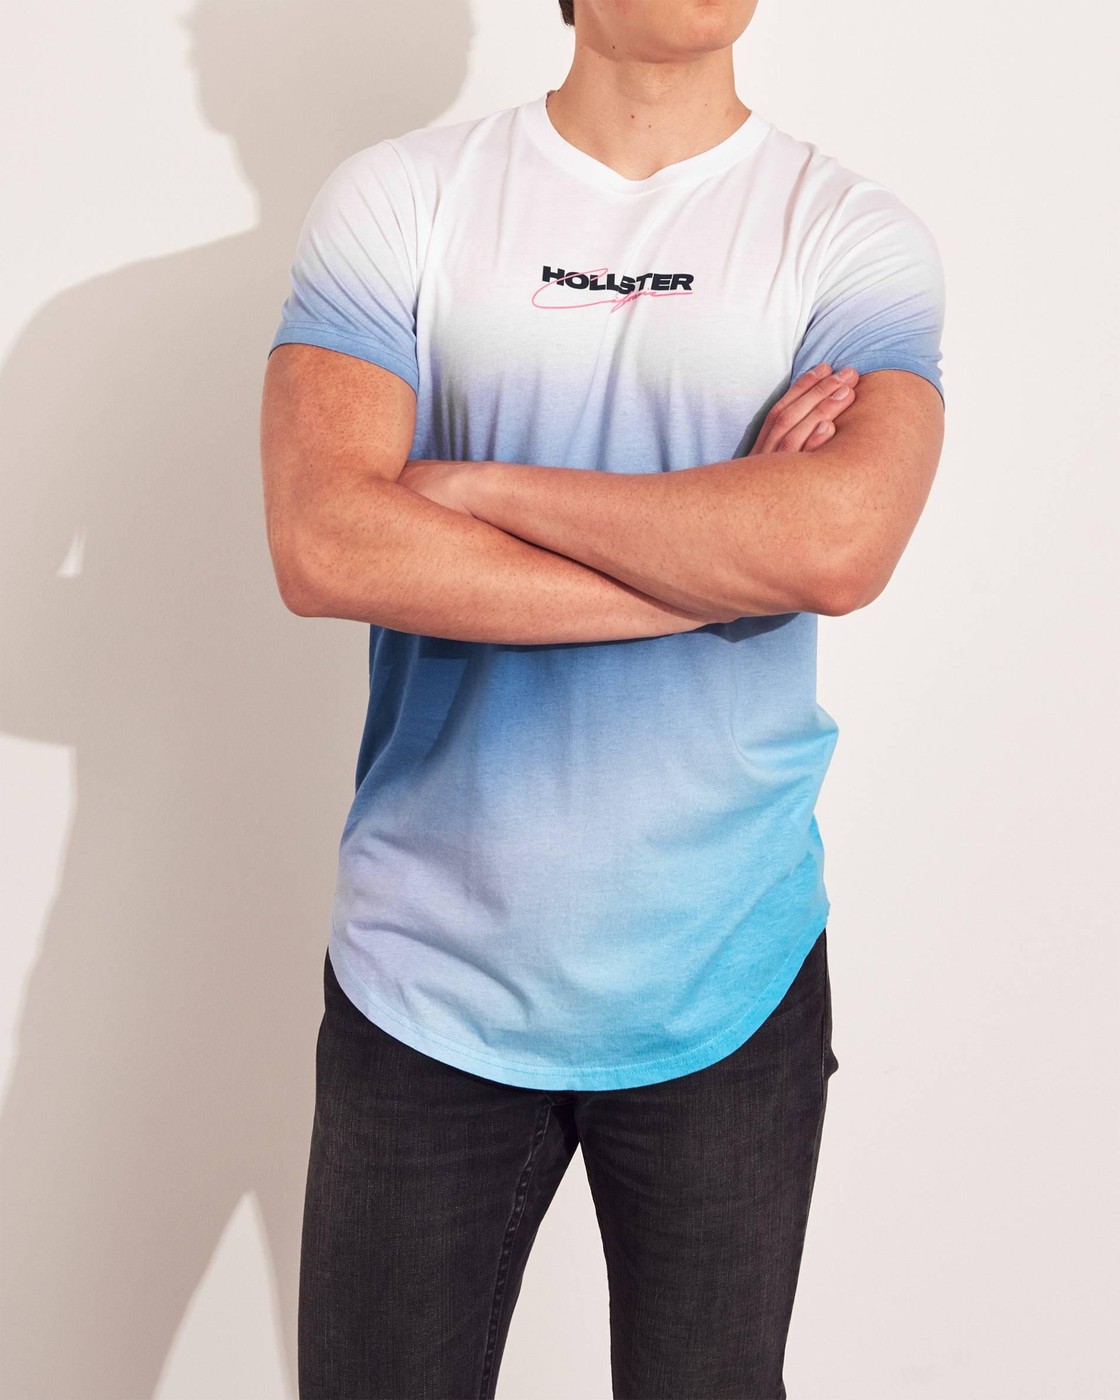 Голубая футболка - мужская футболка Hollister, M, M